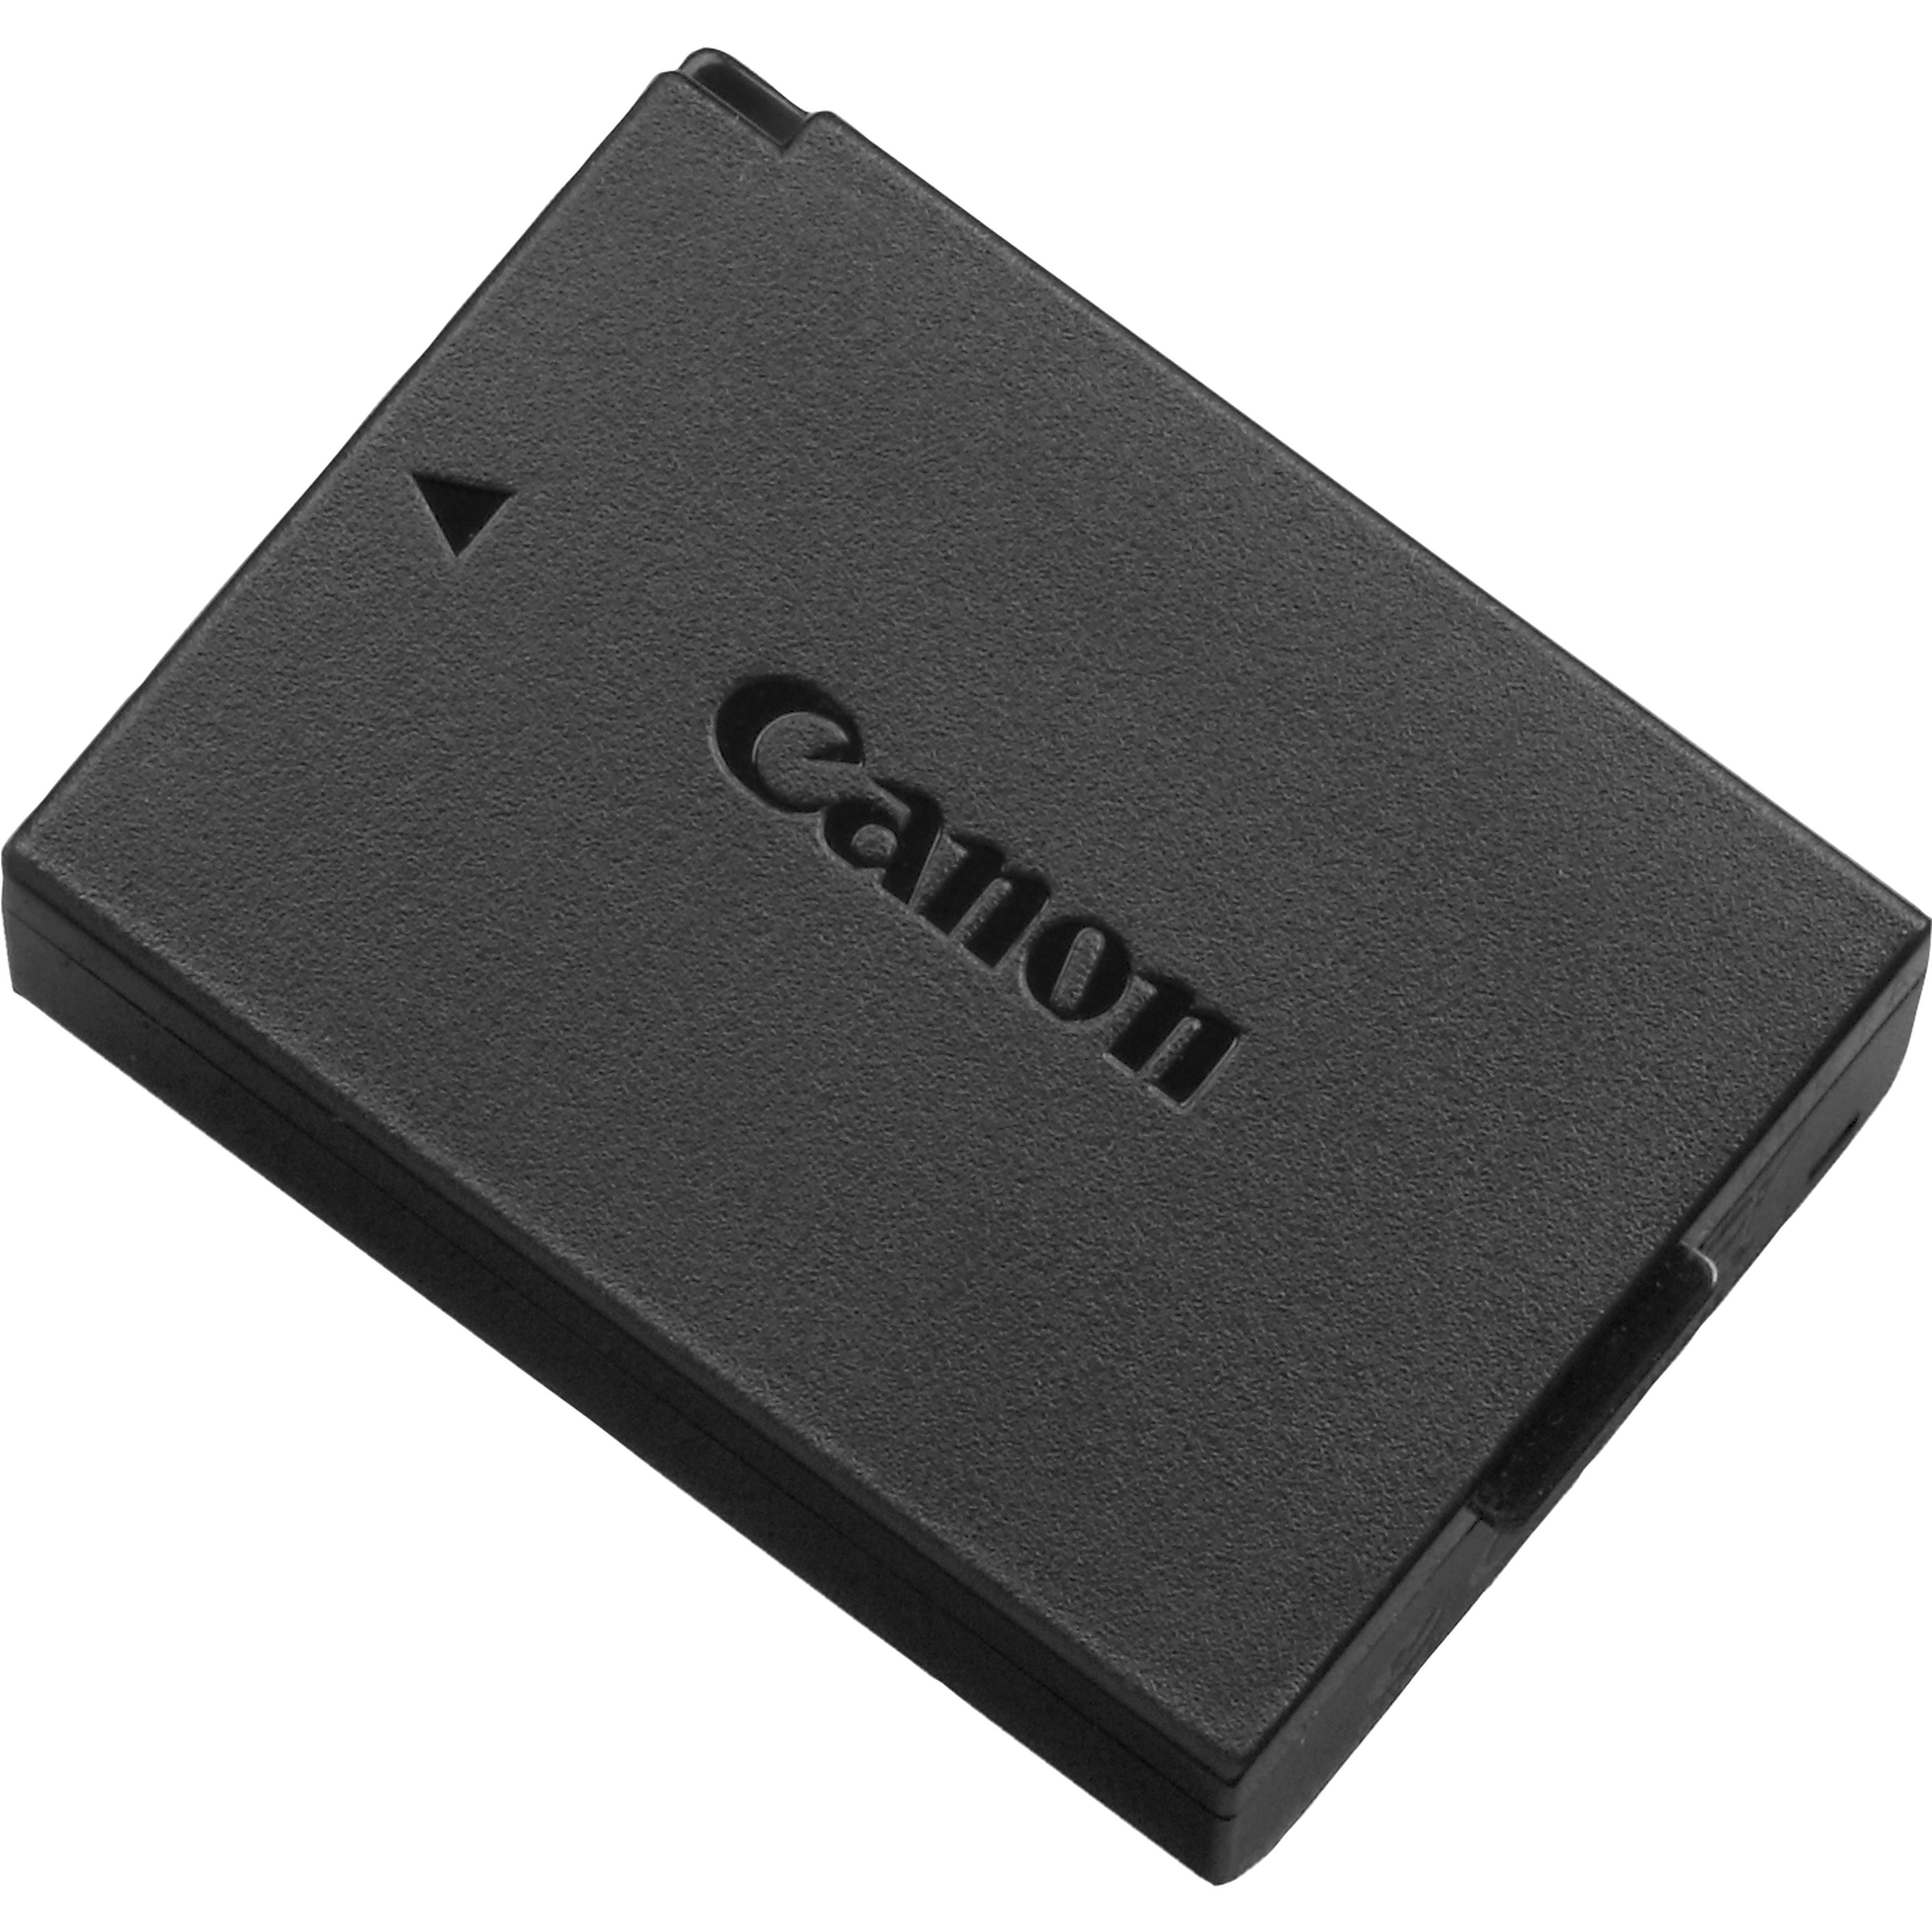 Canon - Slr Camera Accessories   Battery Pack - Lp-e10               F/ Eos 1100d                        5108b002